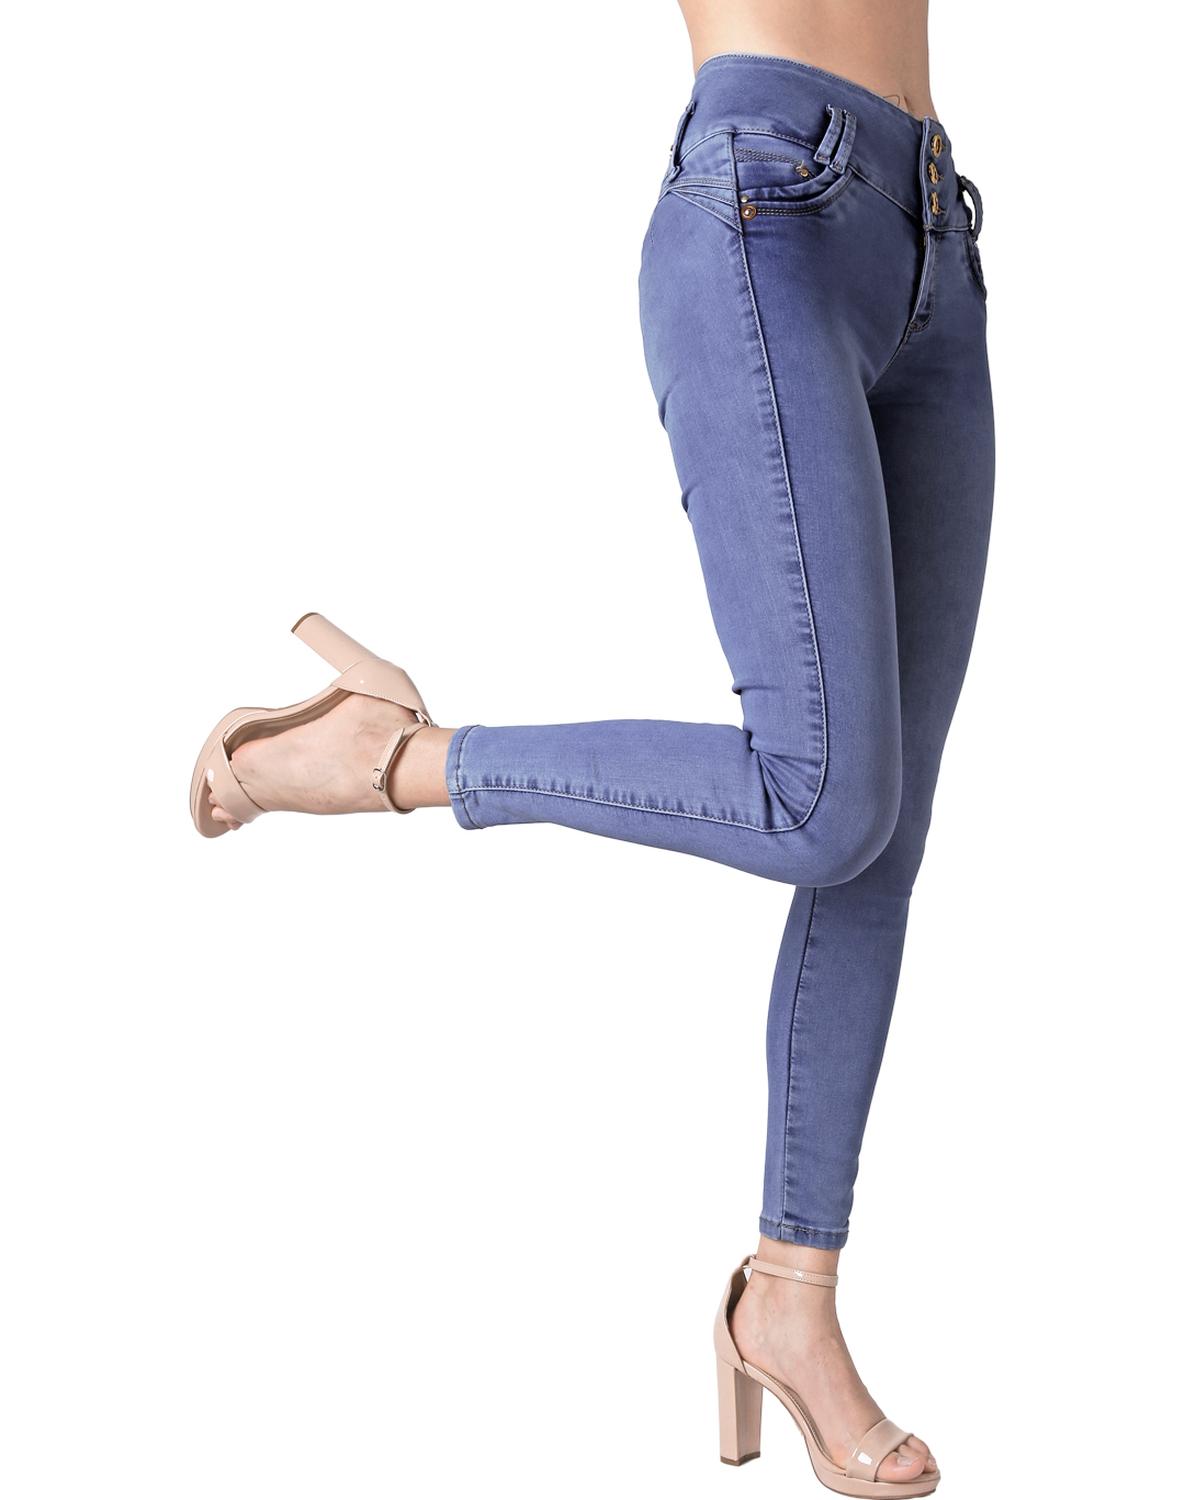 Jeans Moda Skinny Mujer Azul Fergino 52904611